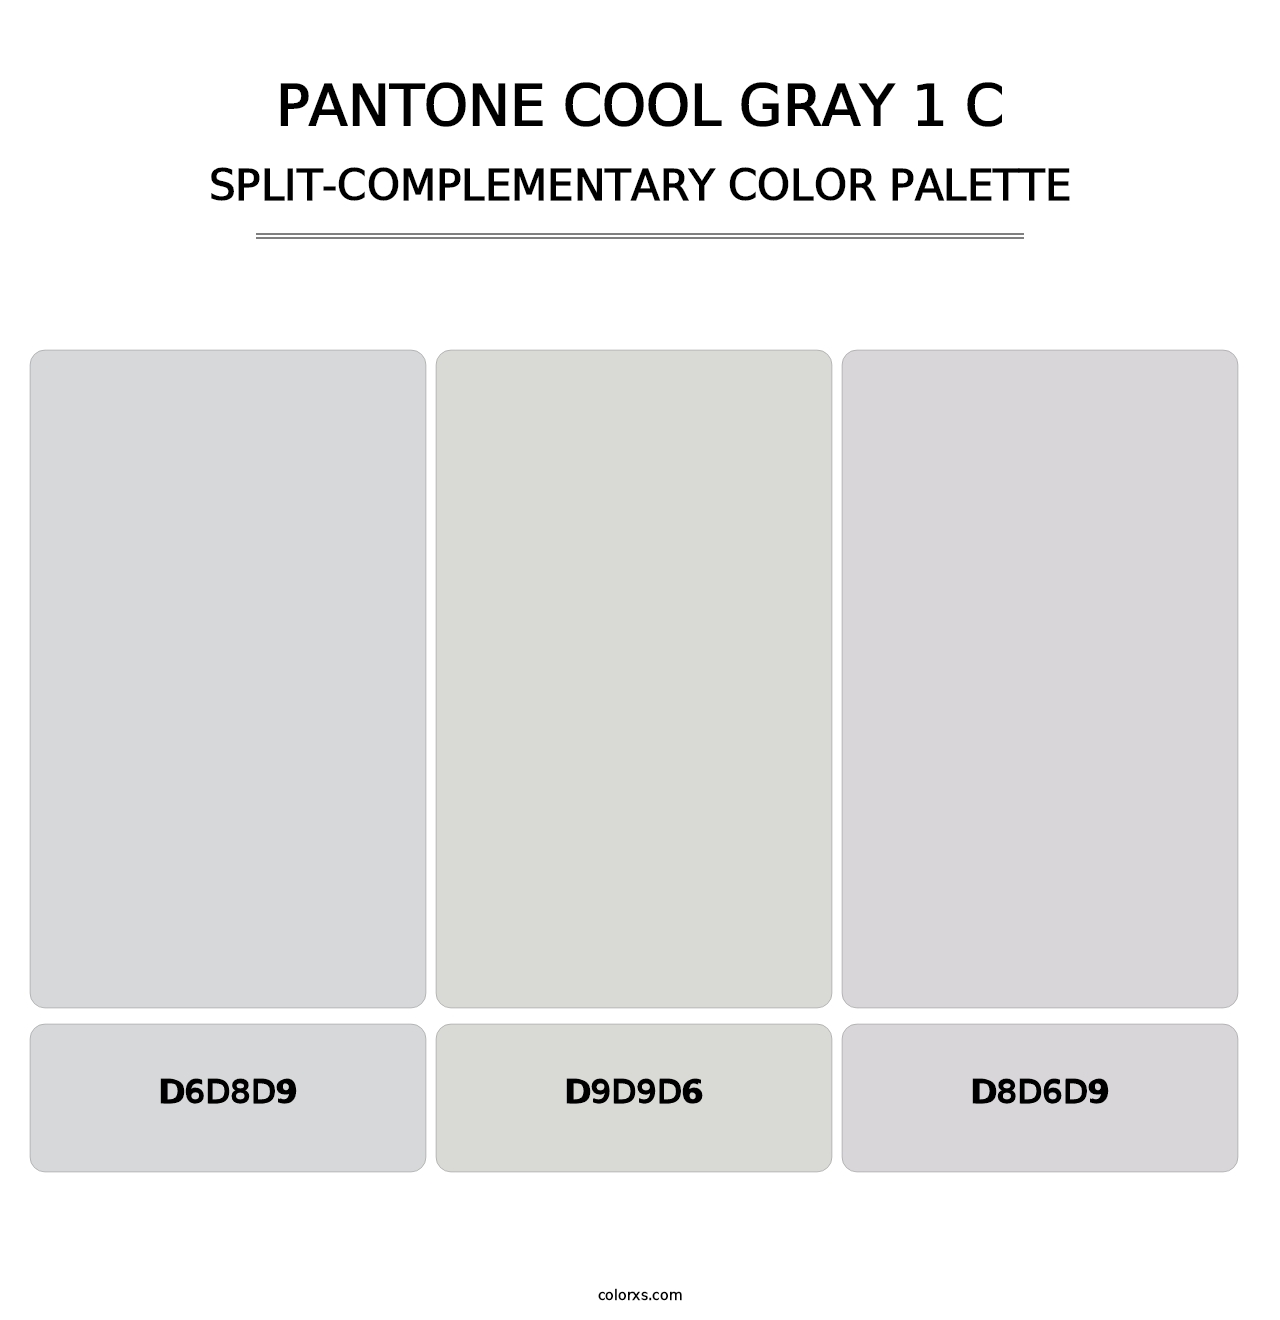 PANTONE Cool Gray 1 C - Split-Complementary Color Palette